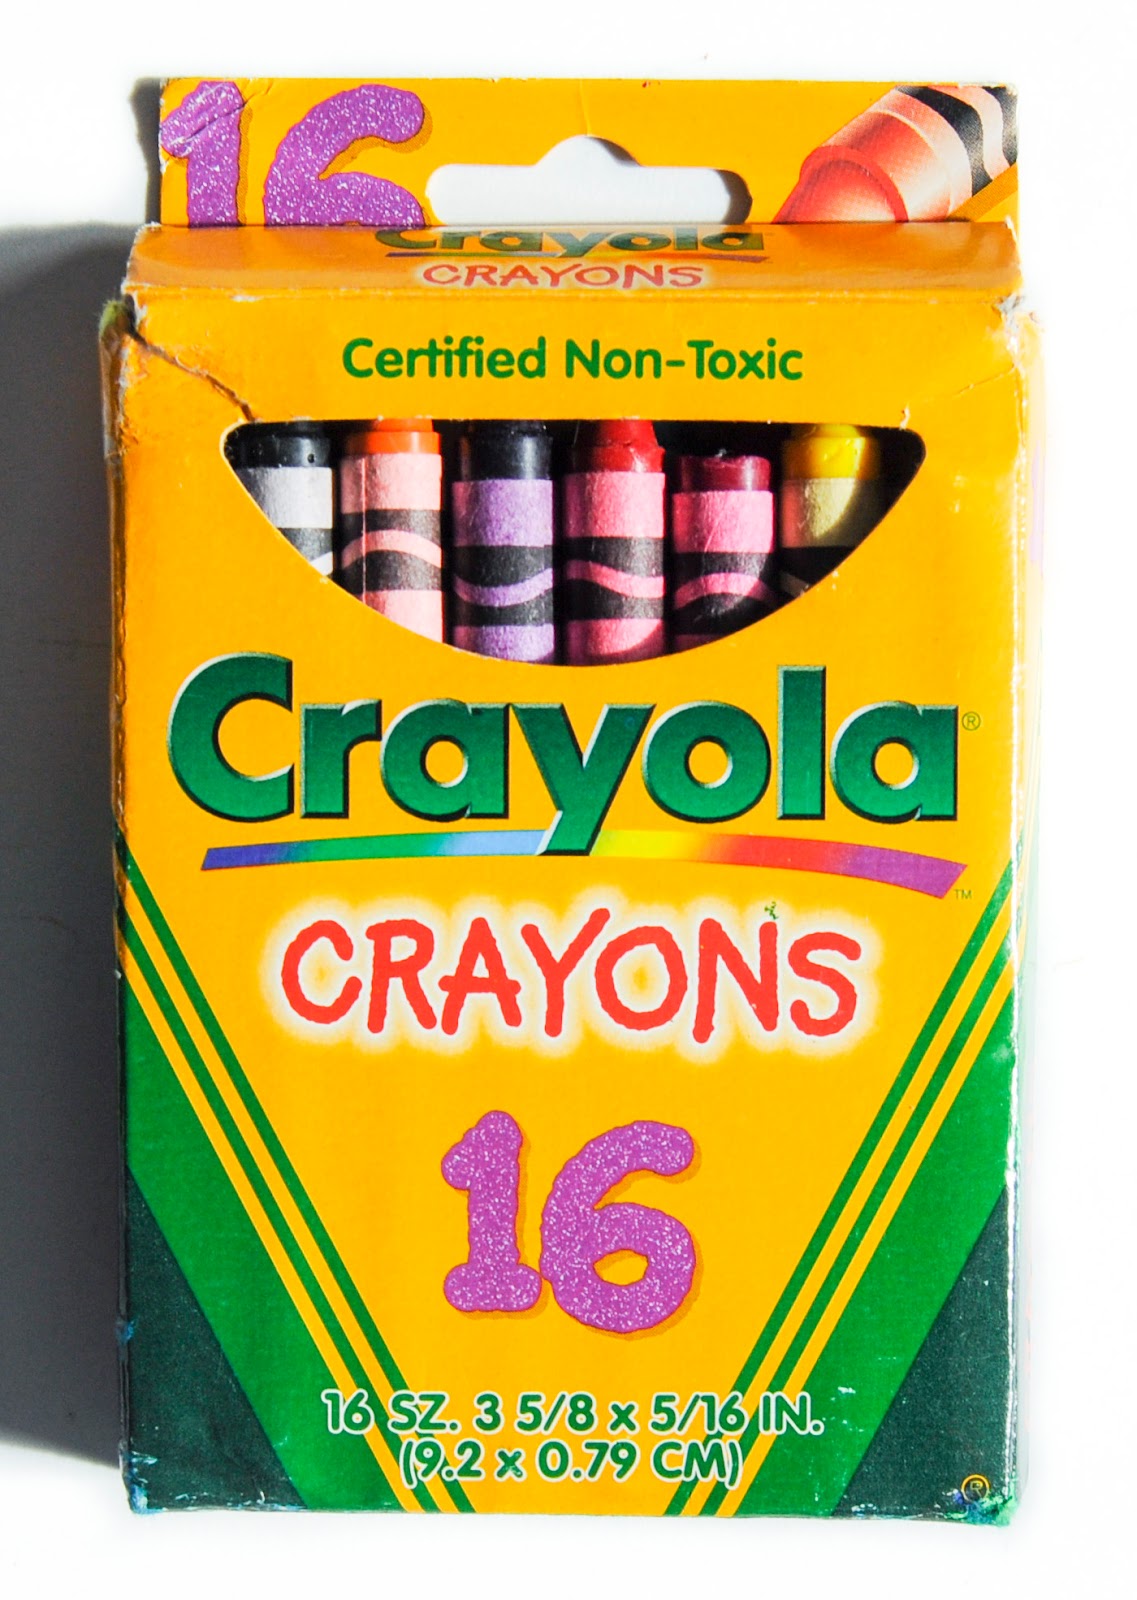 1997+16+crayola+crayons0194edited.jpg